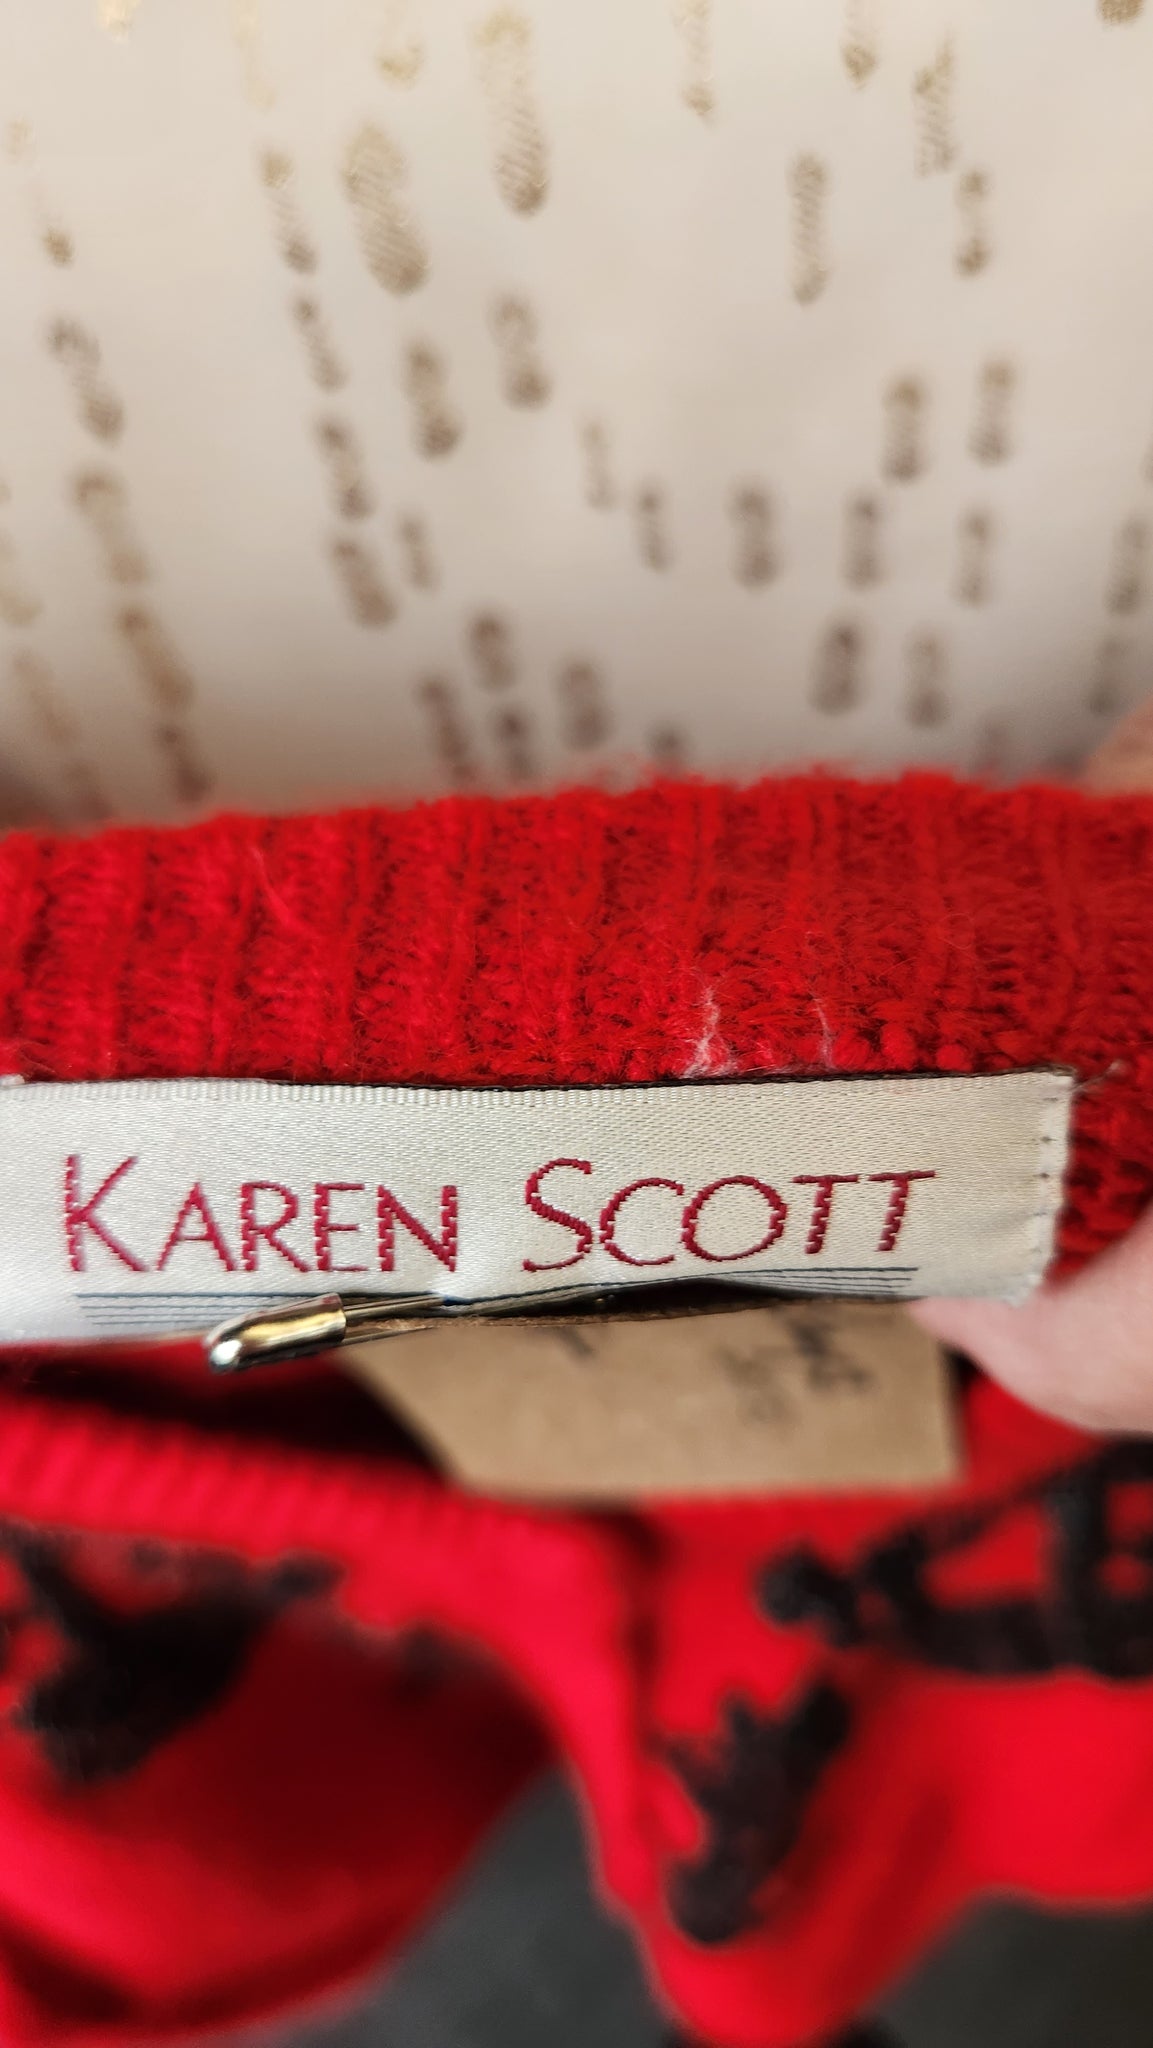 Karen Scott Red Cardigan with Black Beads